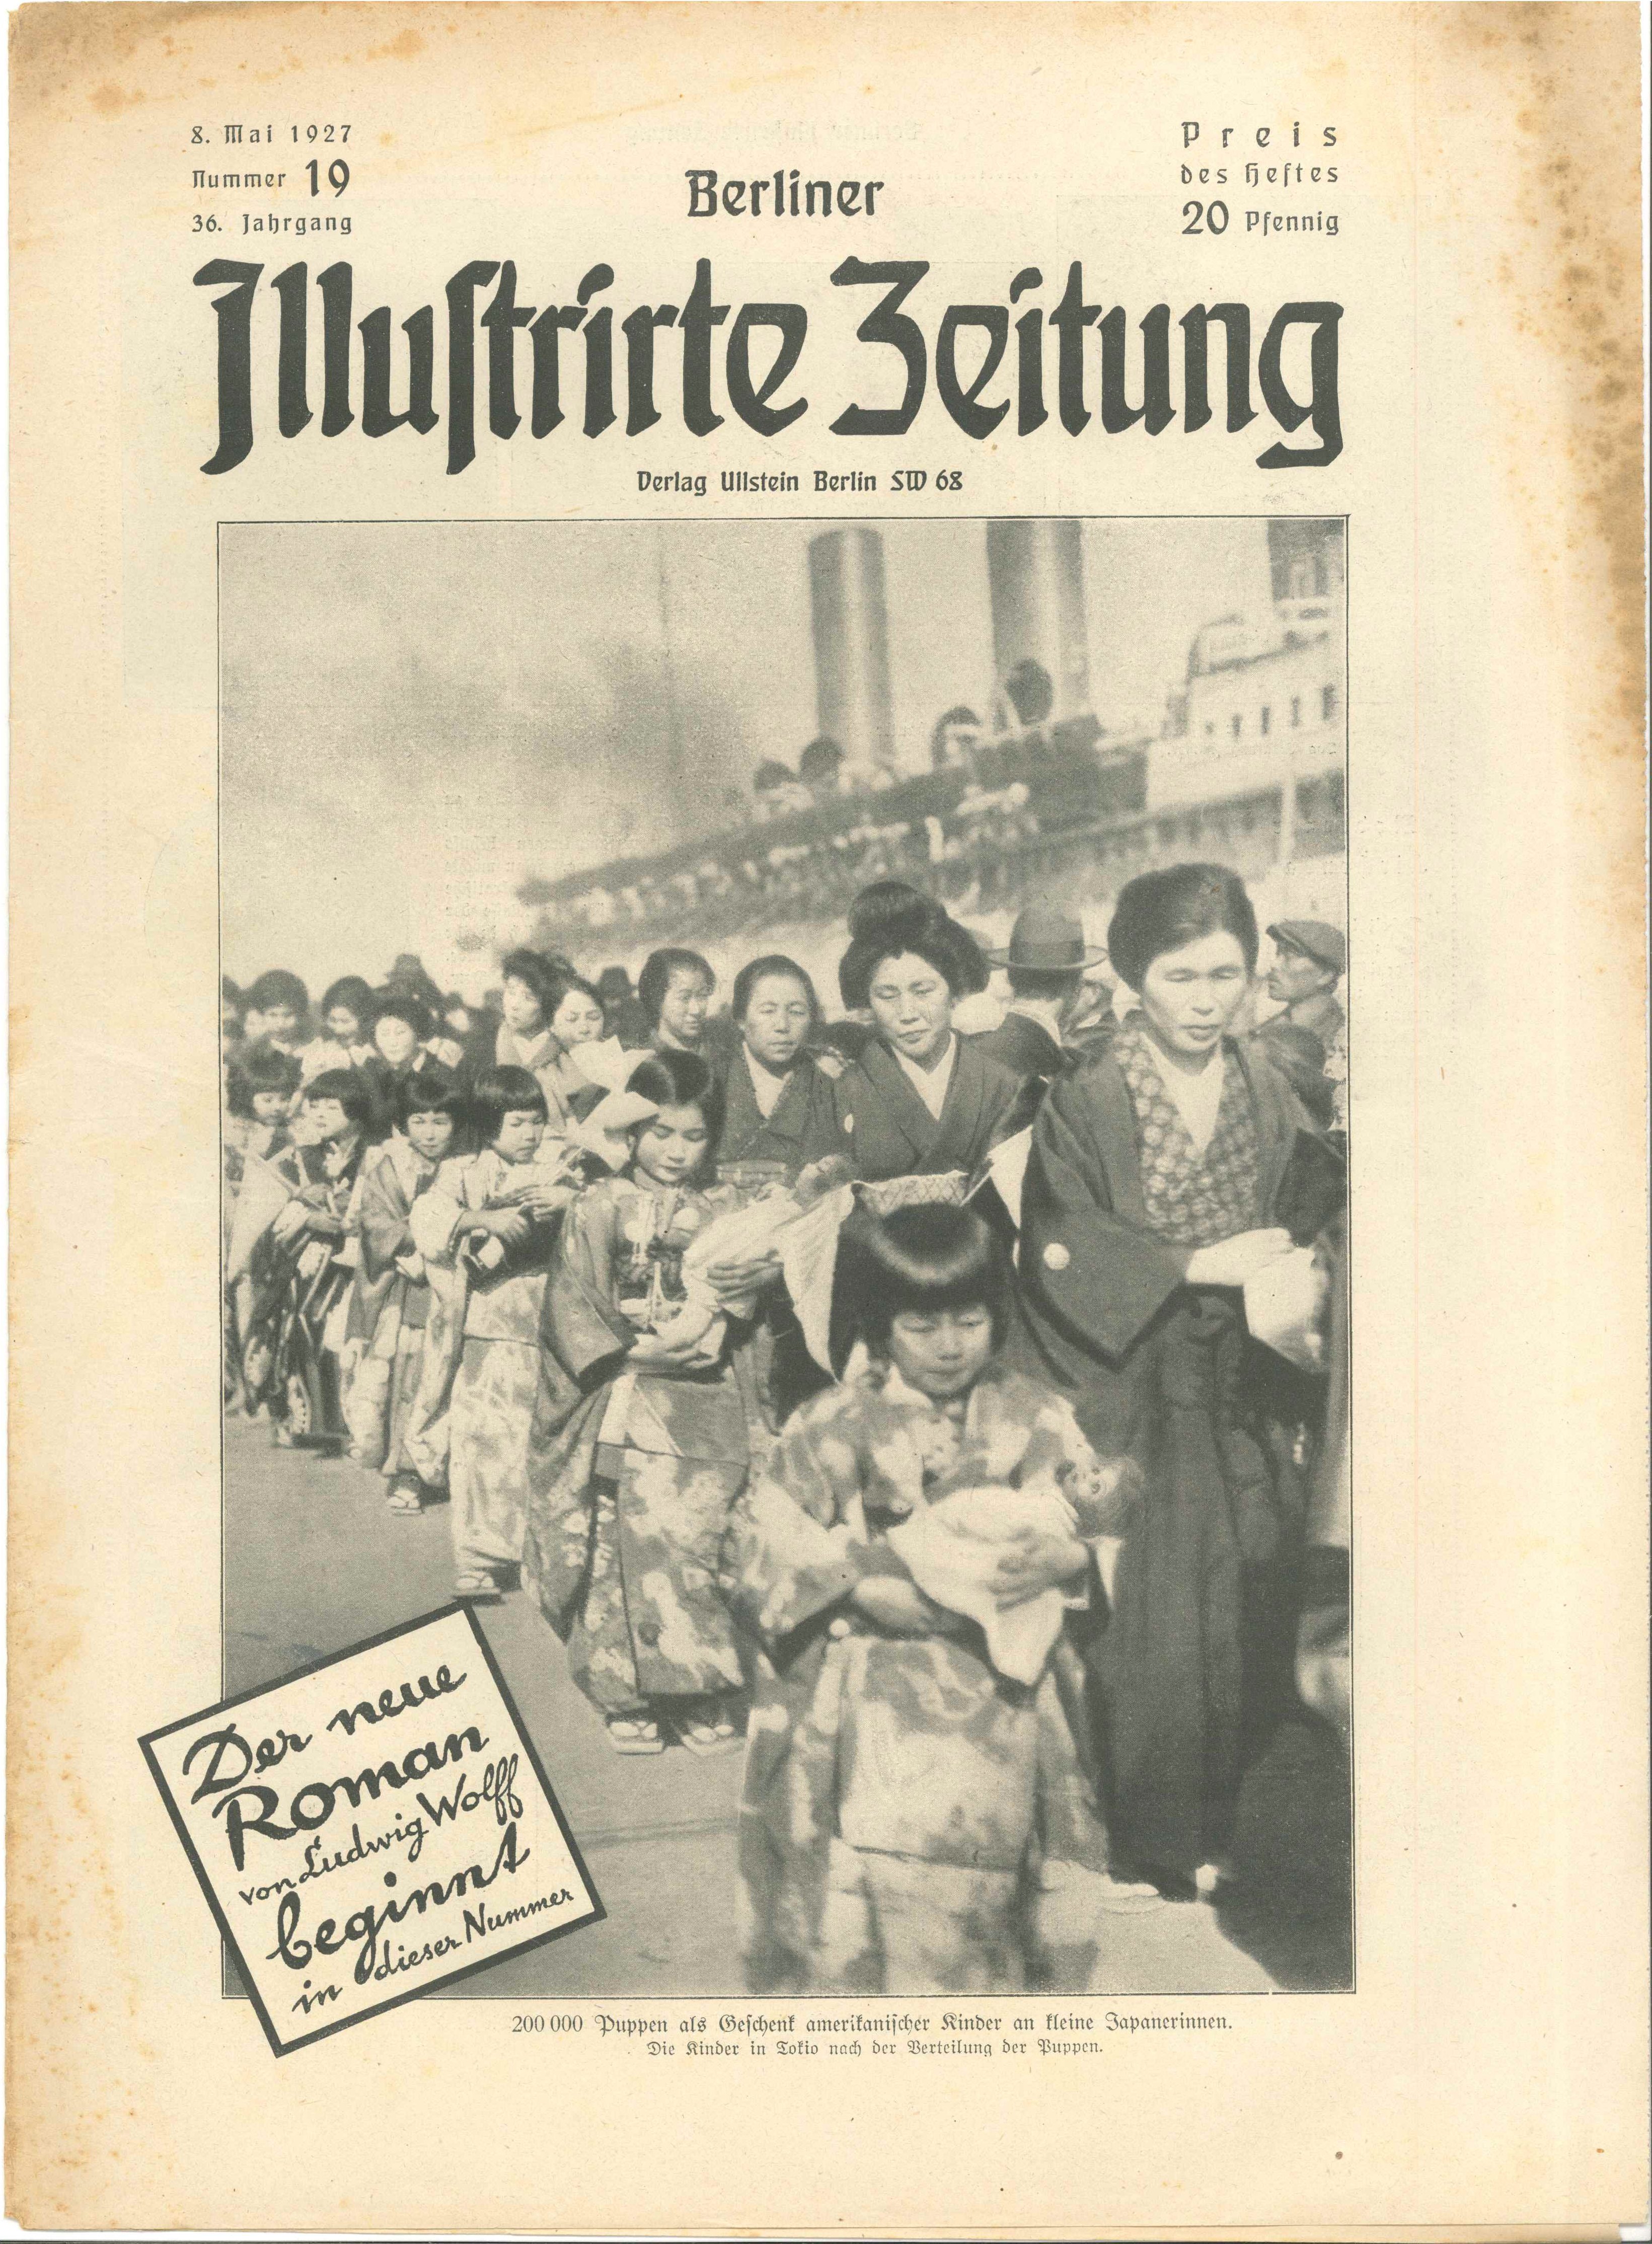 BIZ, Nr. 19, 1927, Titelseite (Kurt Tucholsky Literaturmuseum CC BY-NC-SA)